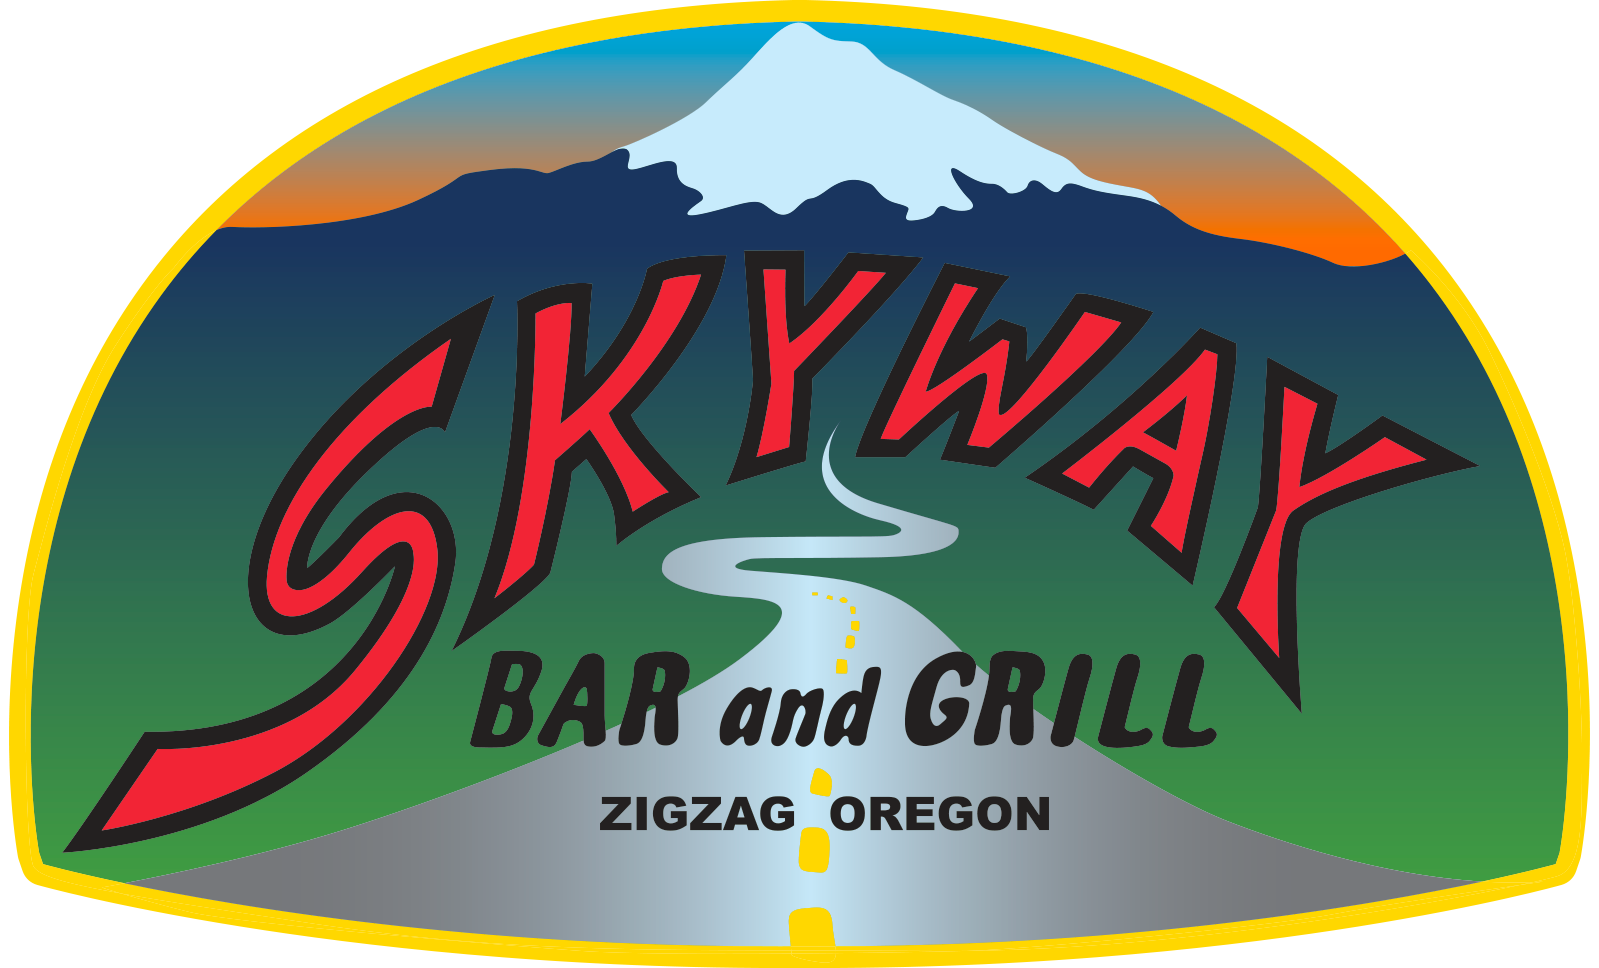 Skyway Bar and Grill – Zigzag, Oregon